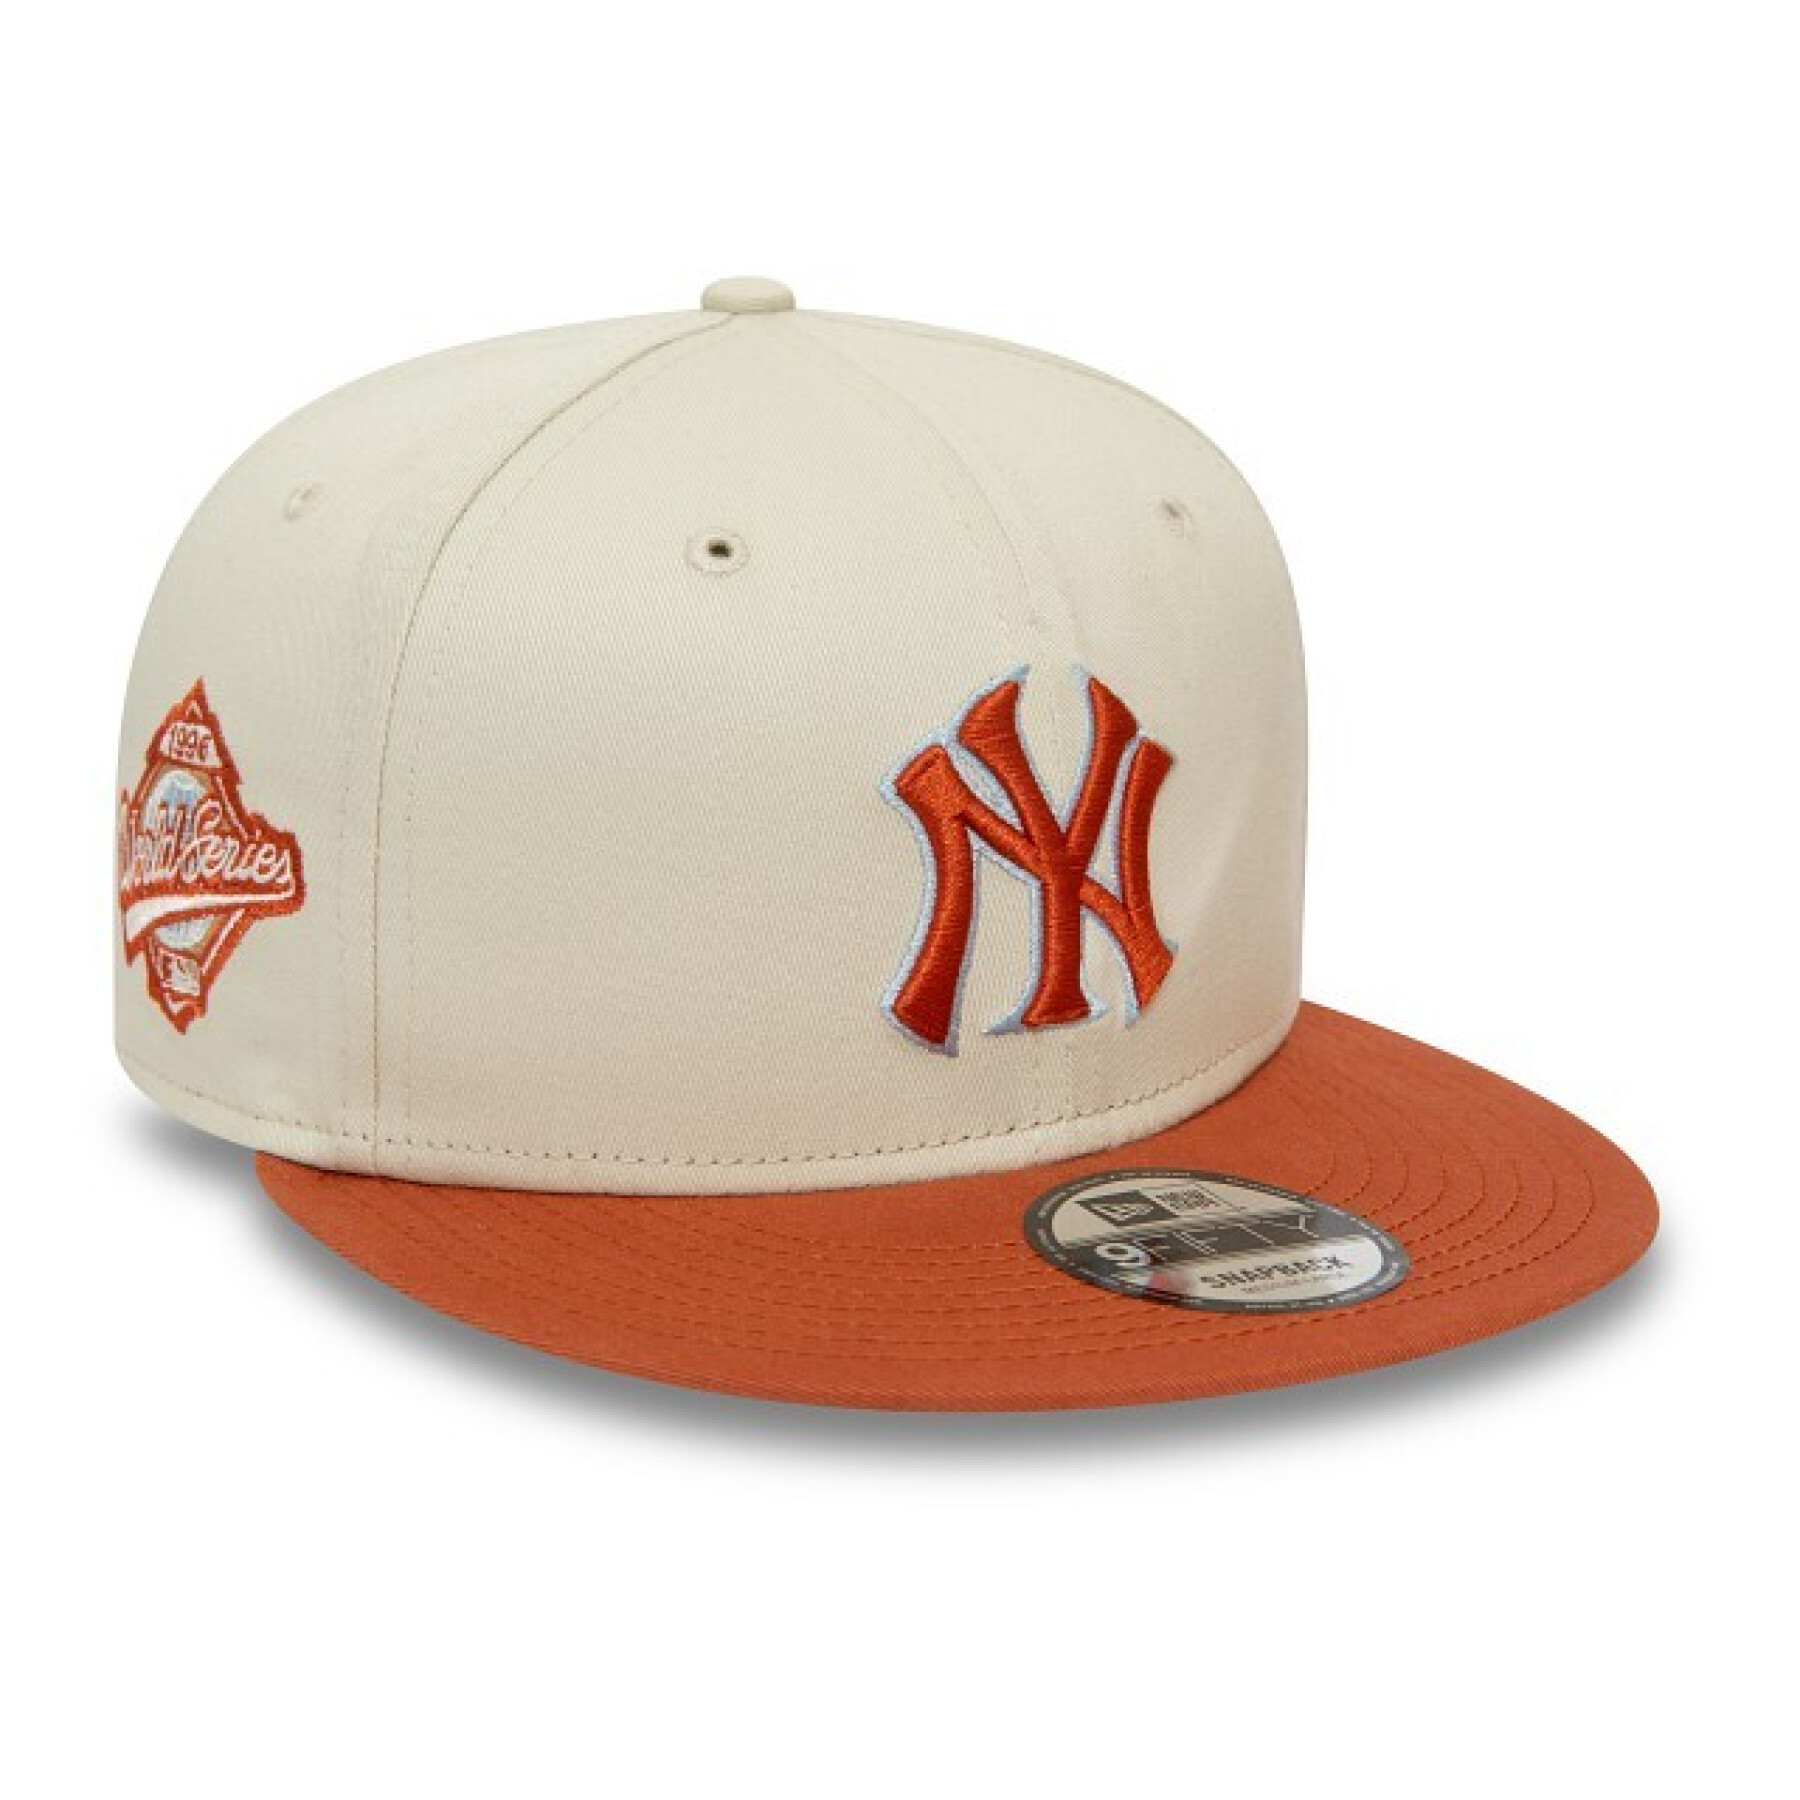 Snapback pet New Era New York Yankees 9FIFTY